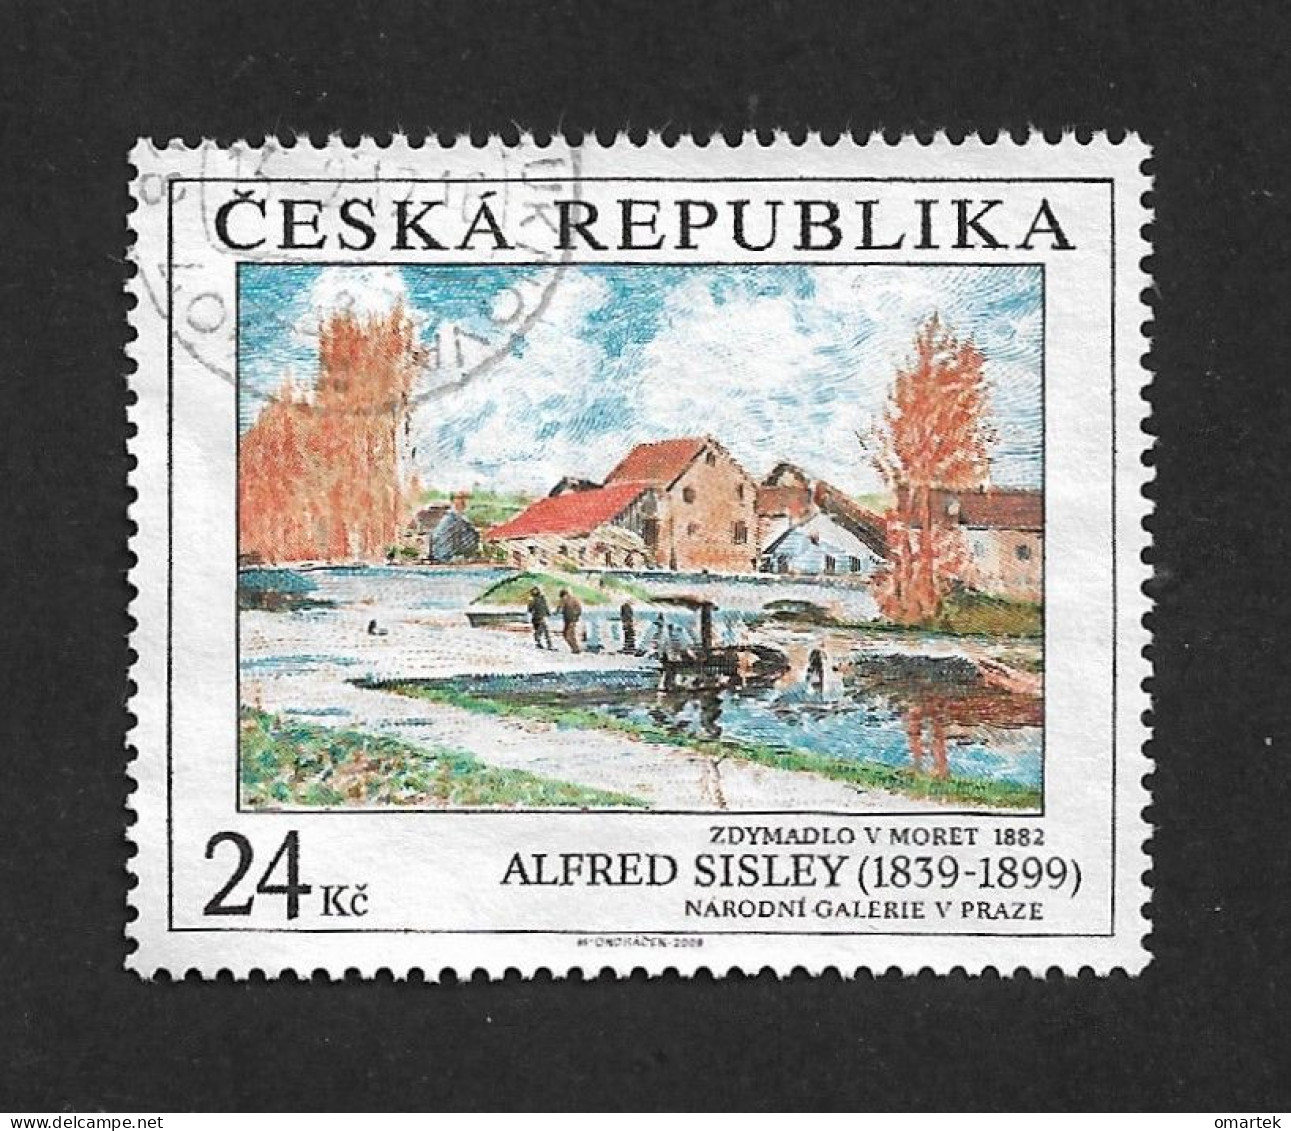 Czech Republic 2009 ⊙ Mi 614 Sc 3435 Alfred Sisley. Art Painting. Tschechische Republik. C3 - Usati